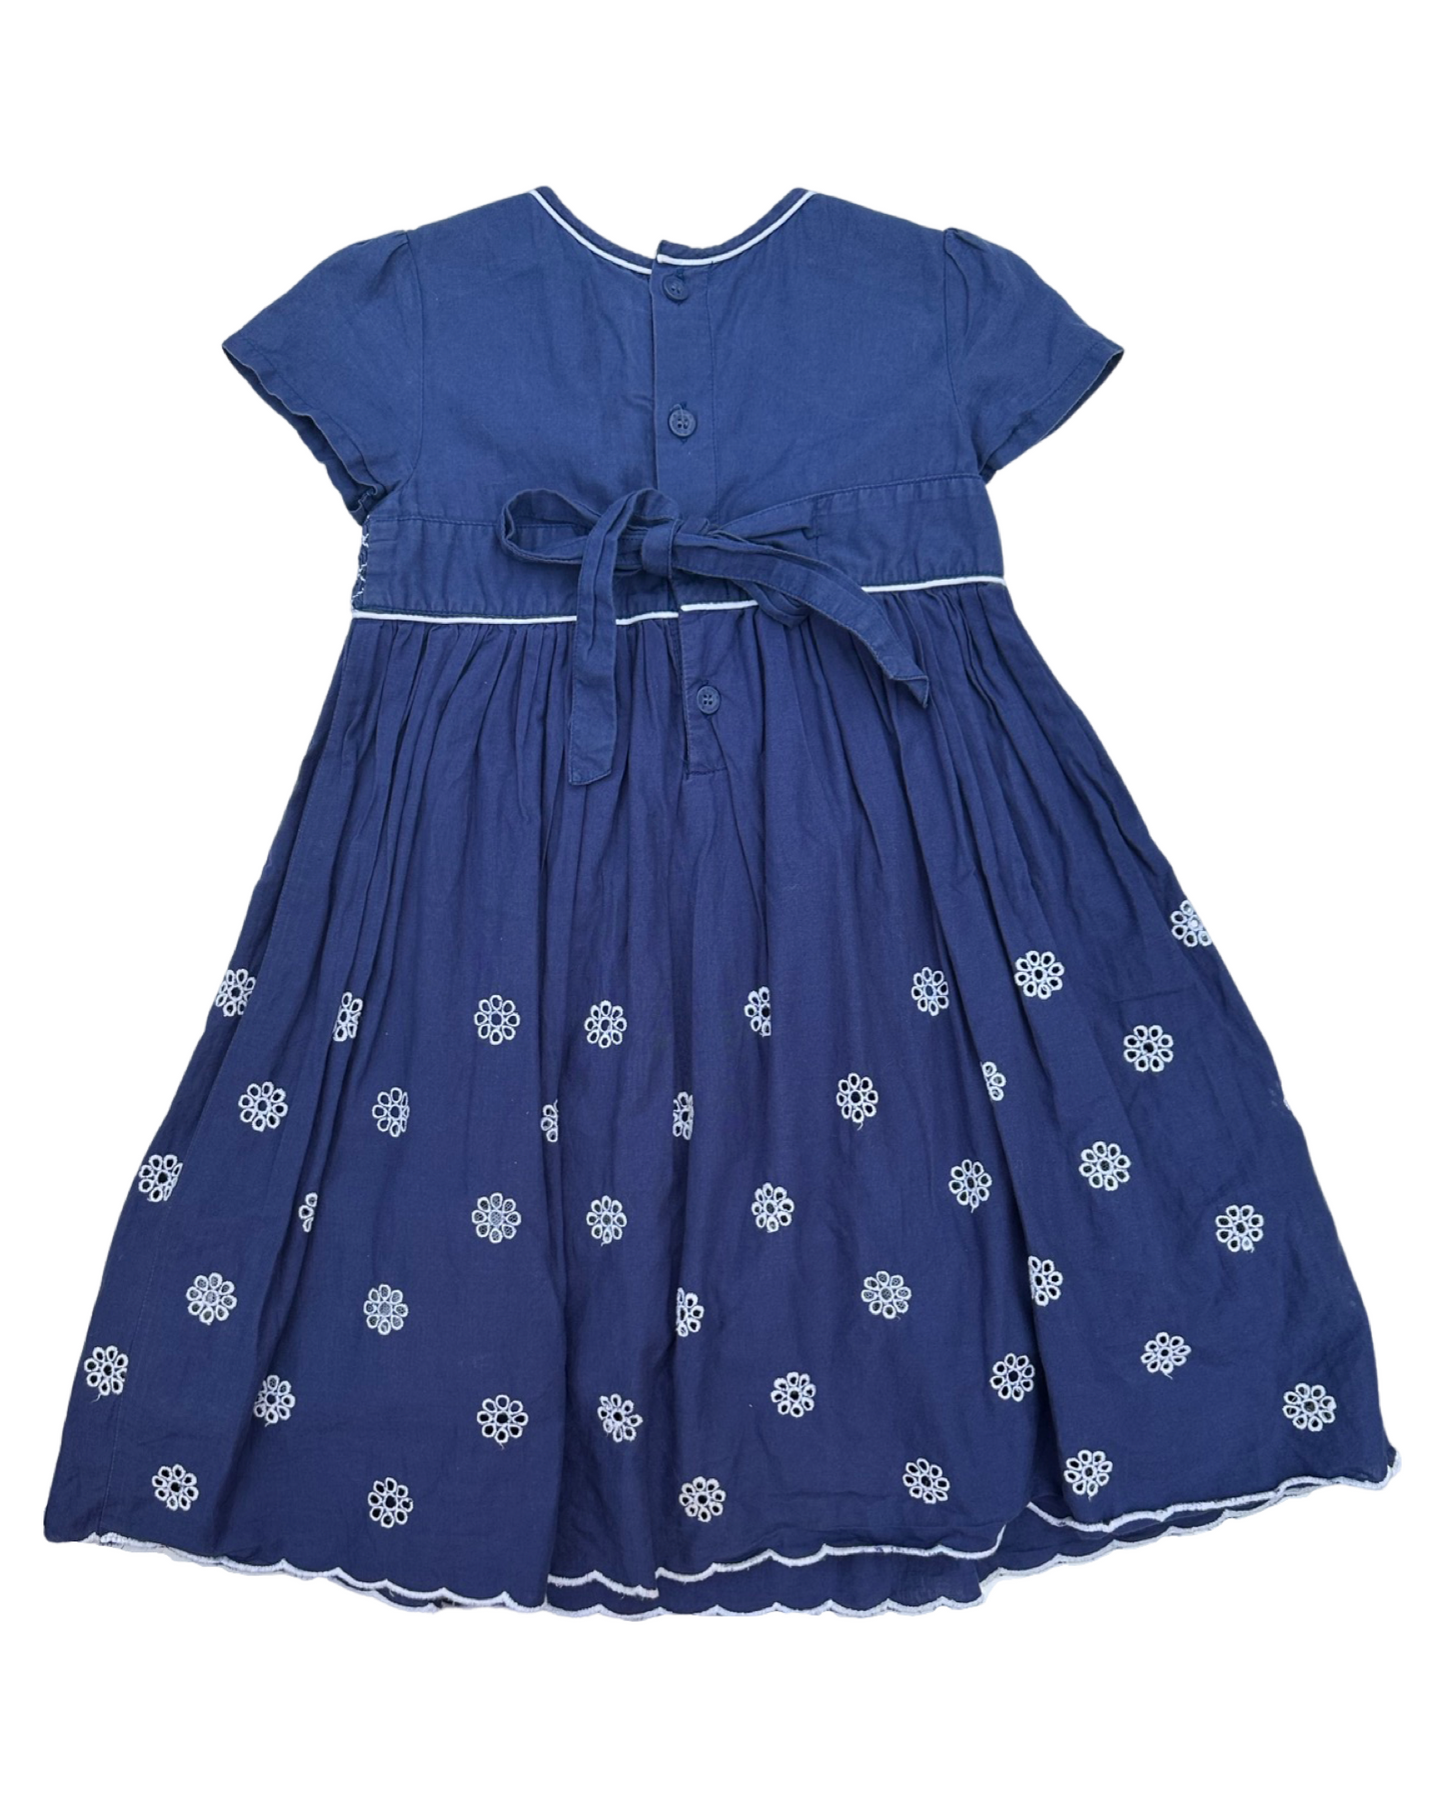 JoJo Maman Bebe blue floral dress (size 2-3yrs)